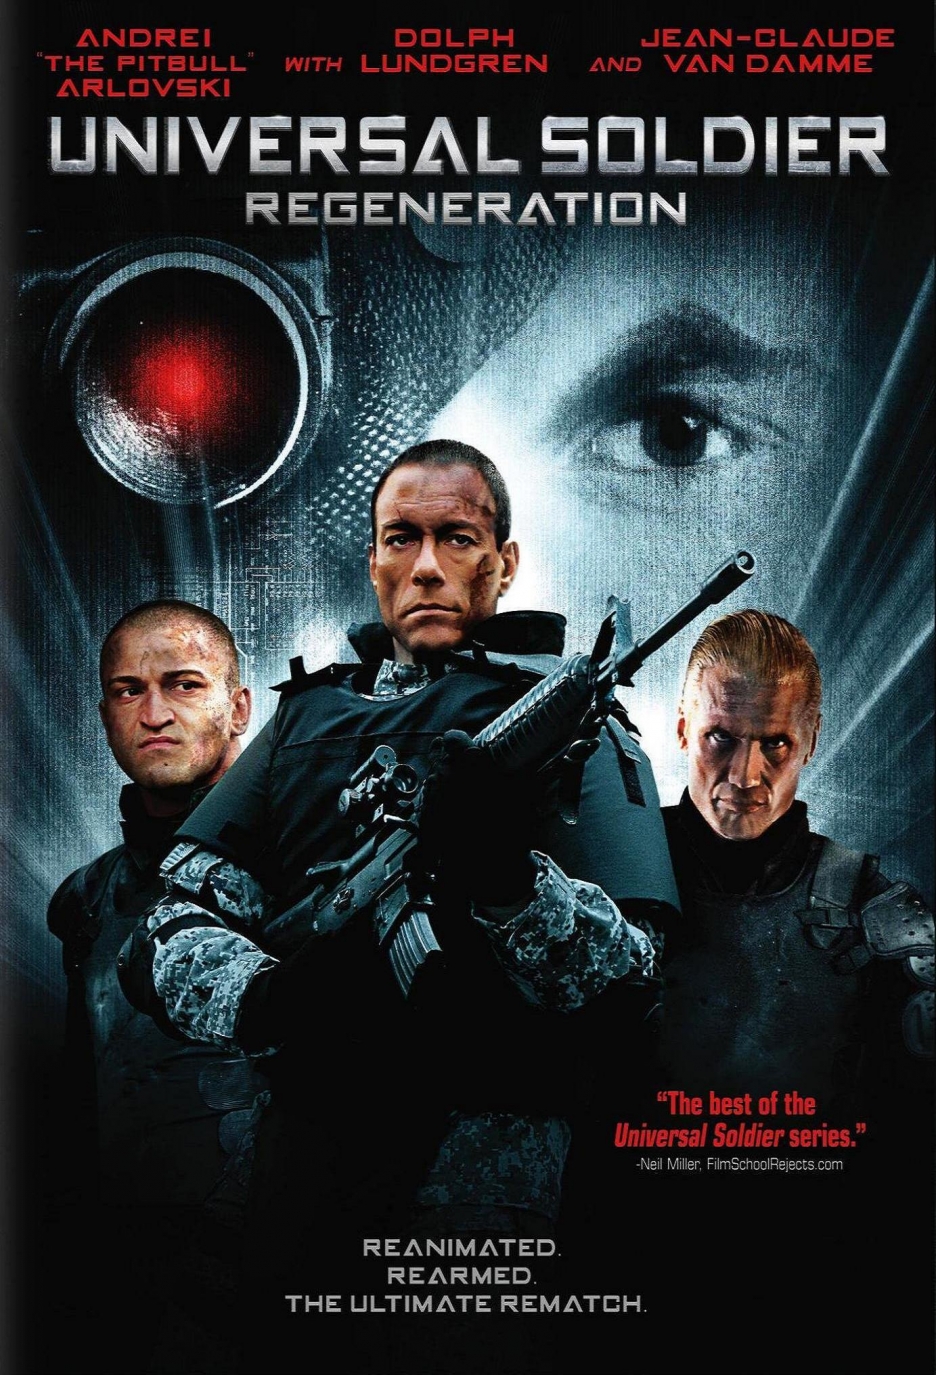 Universal Soldier: Regeneration (2009) 2 คนไม่ใช่คน 3 สงครามสมองกลพันธุ์ใหม่ Dolph Lundgren